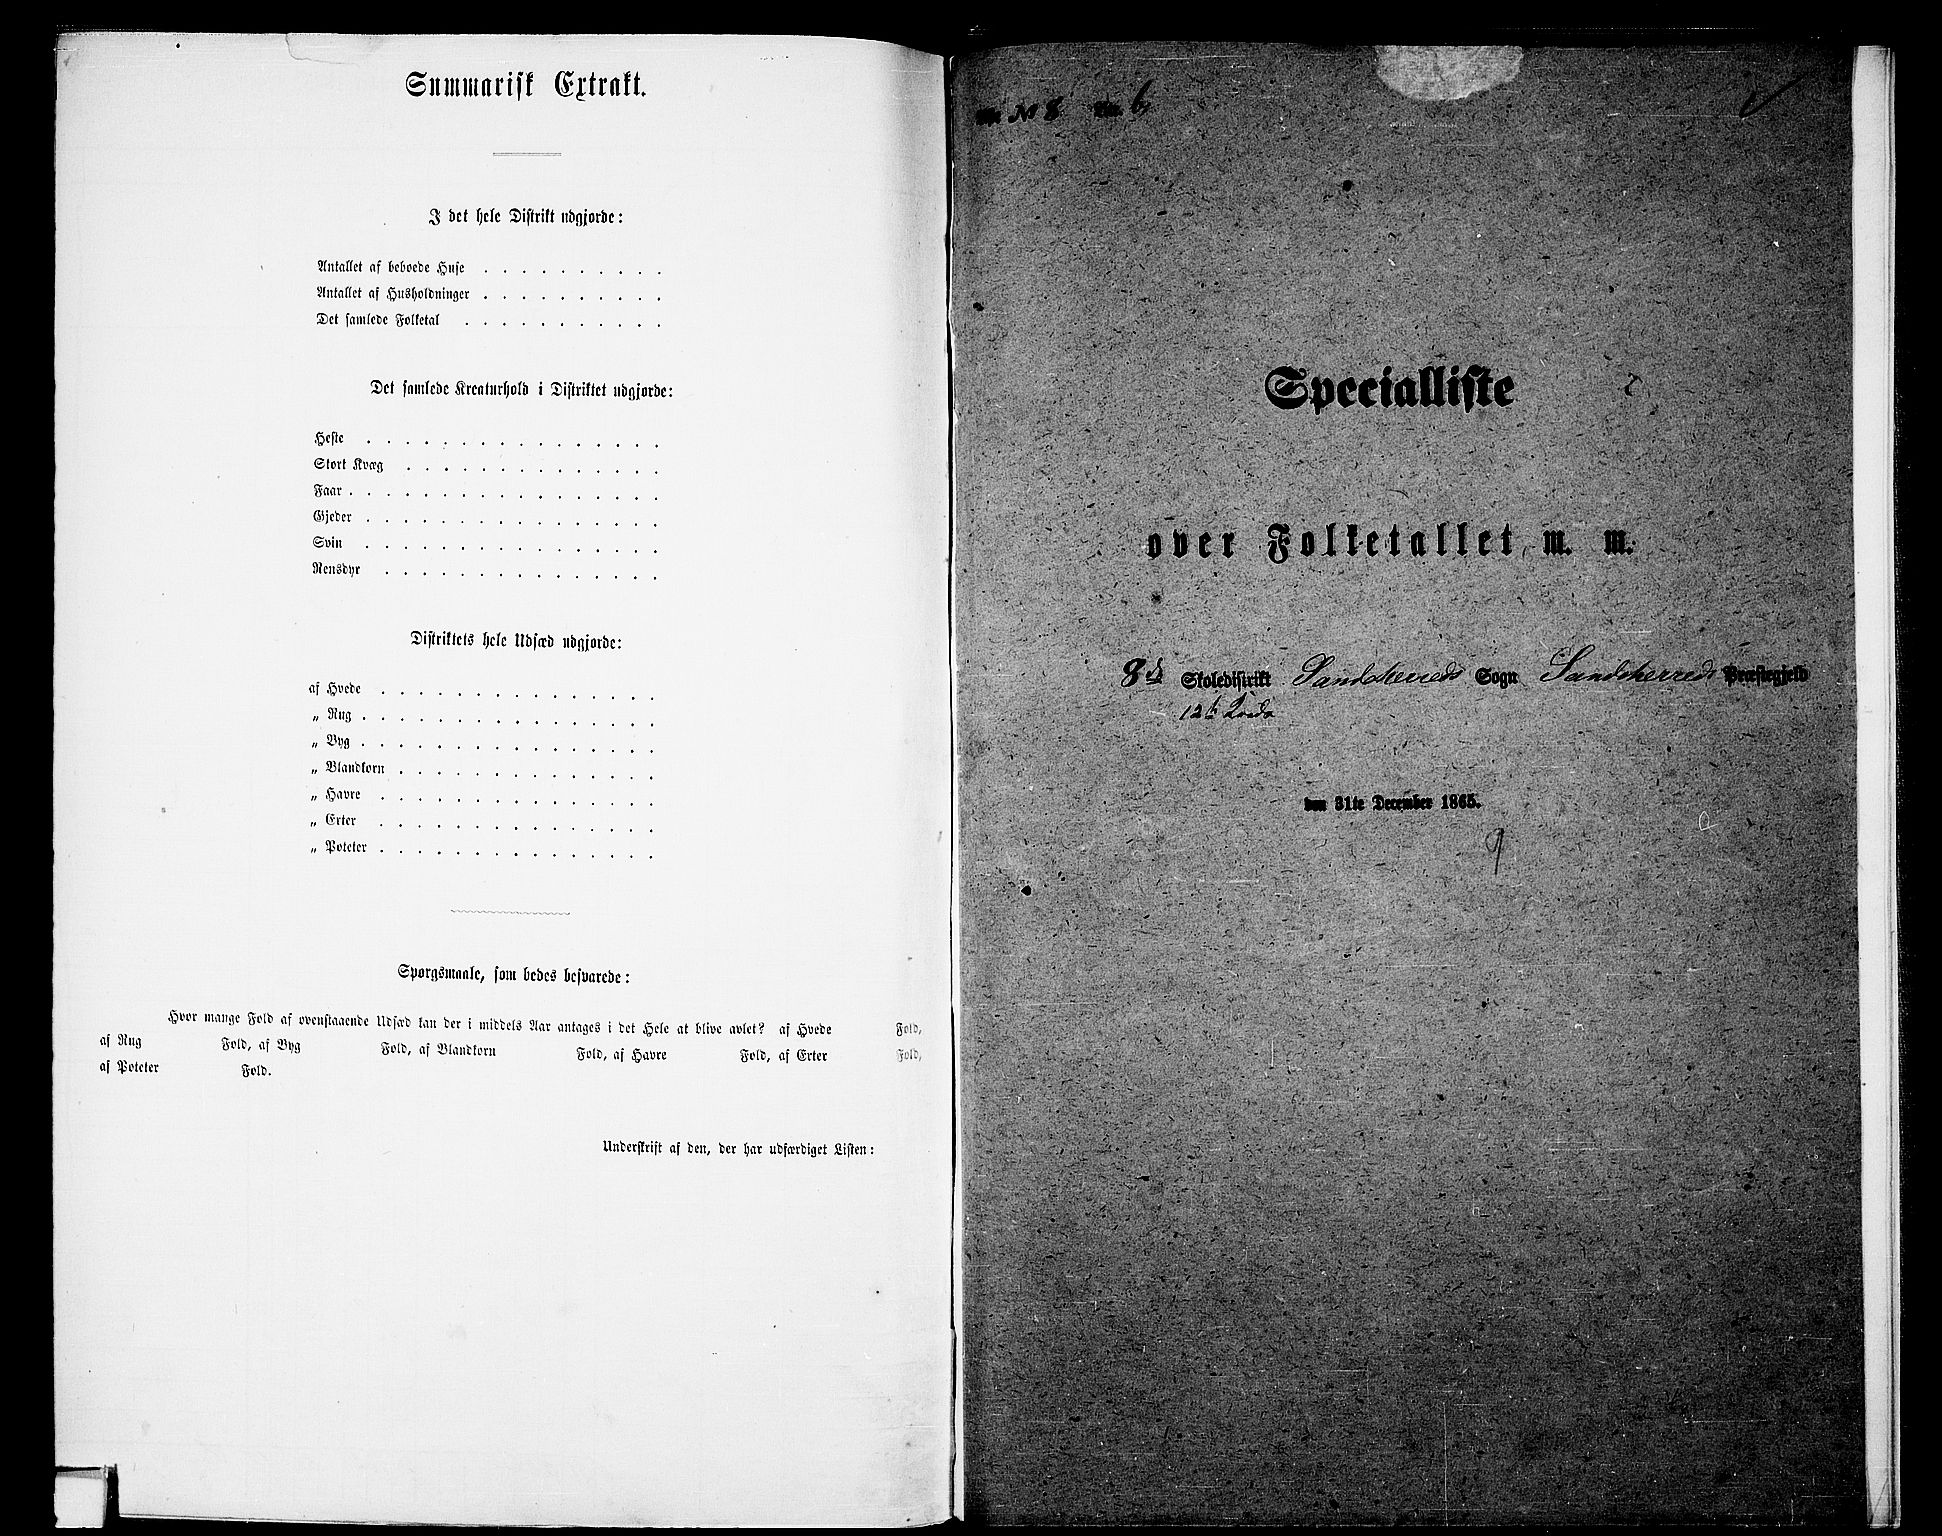 RA, Folketelling 1865 for 0724L Sandeherred prestegjeld, Sandeherred sokn, 1865, s. 213